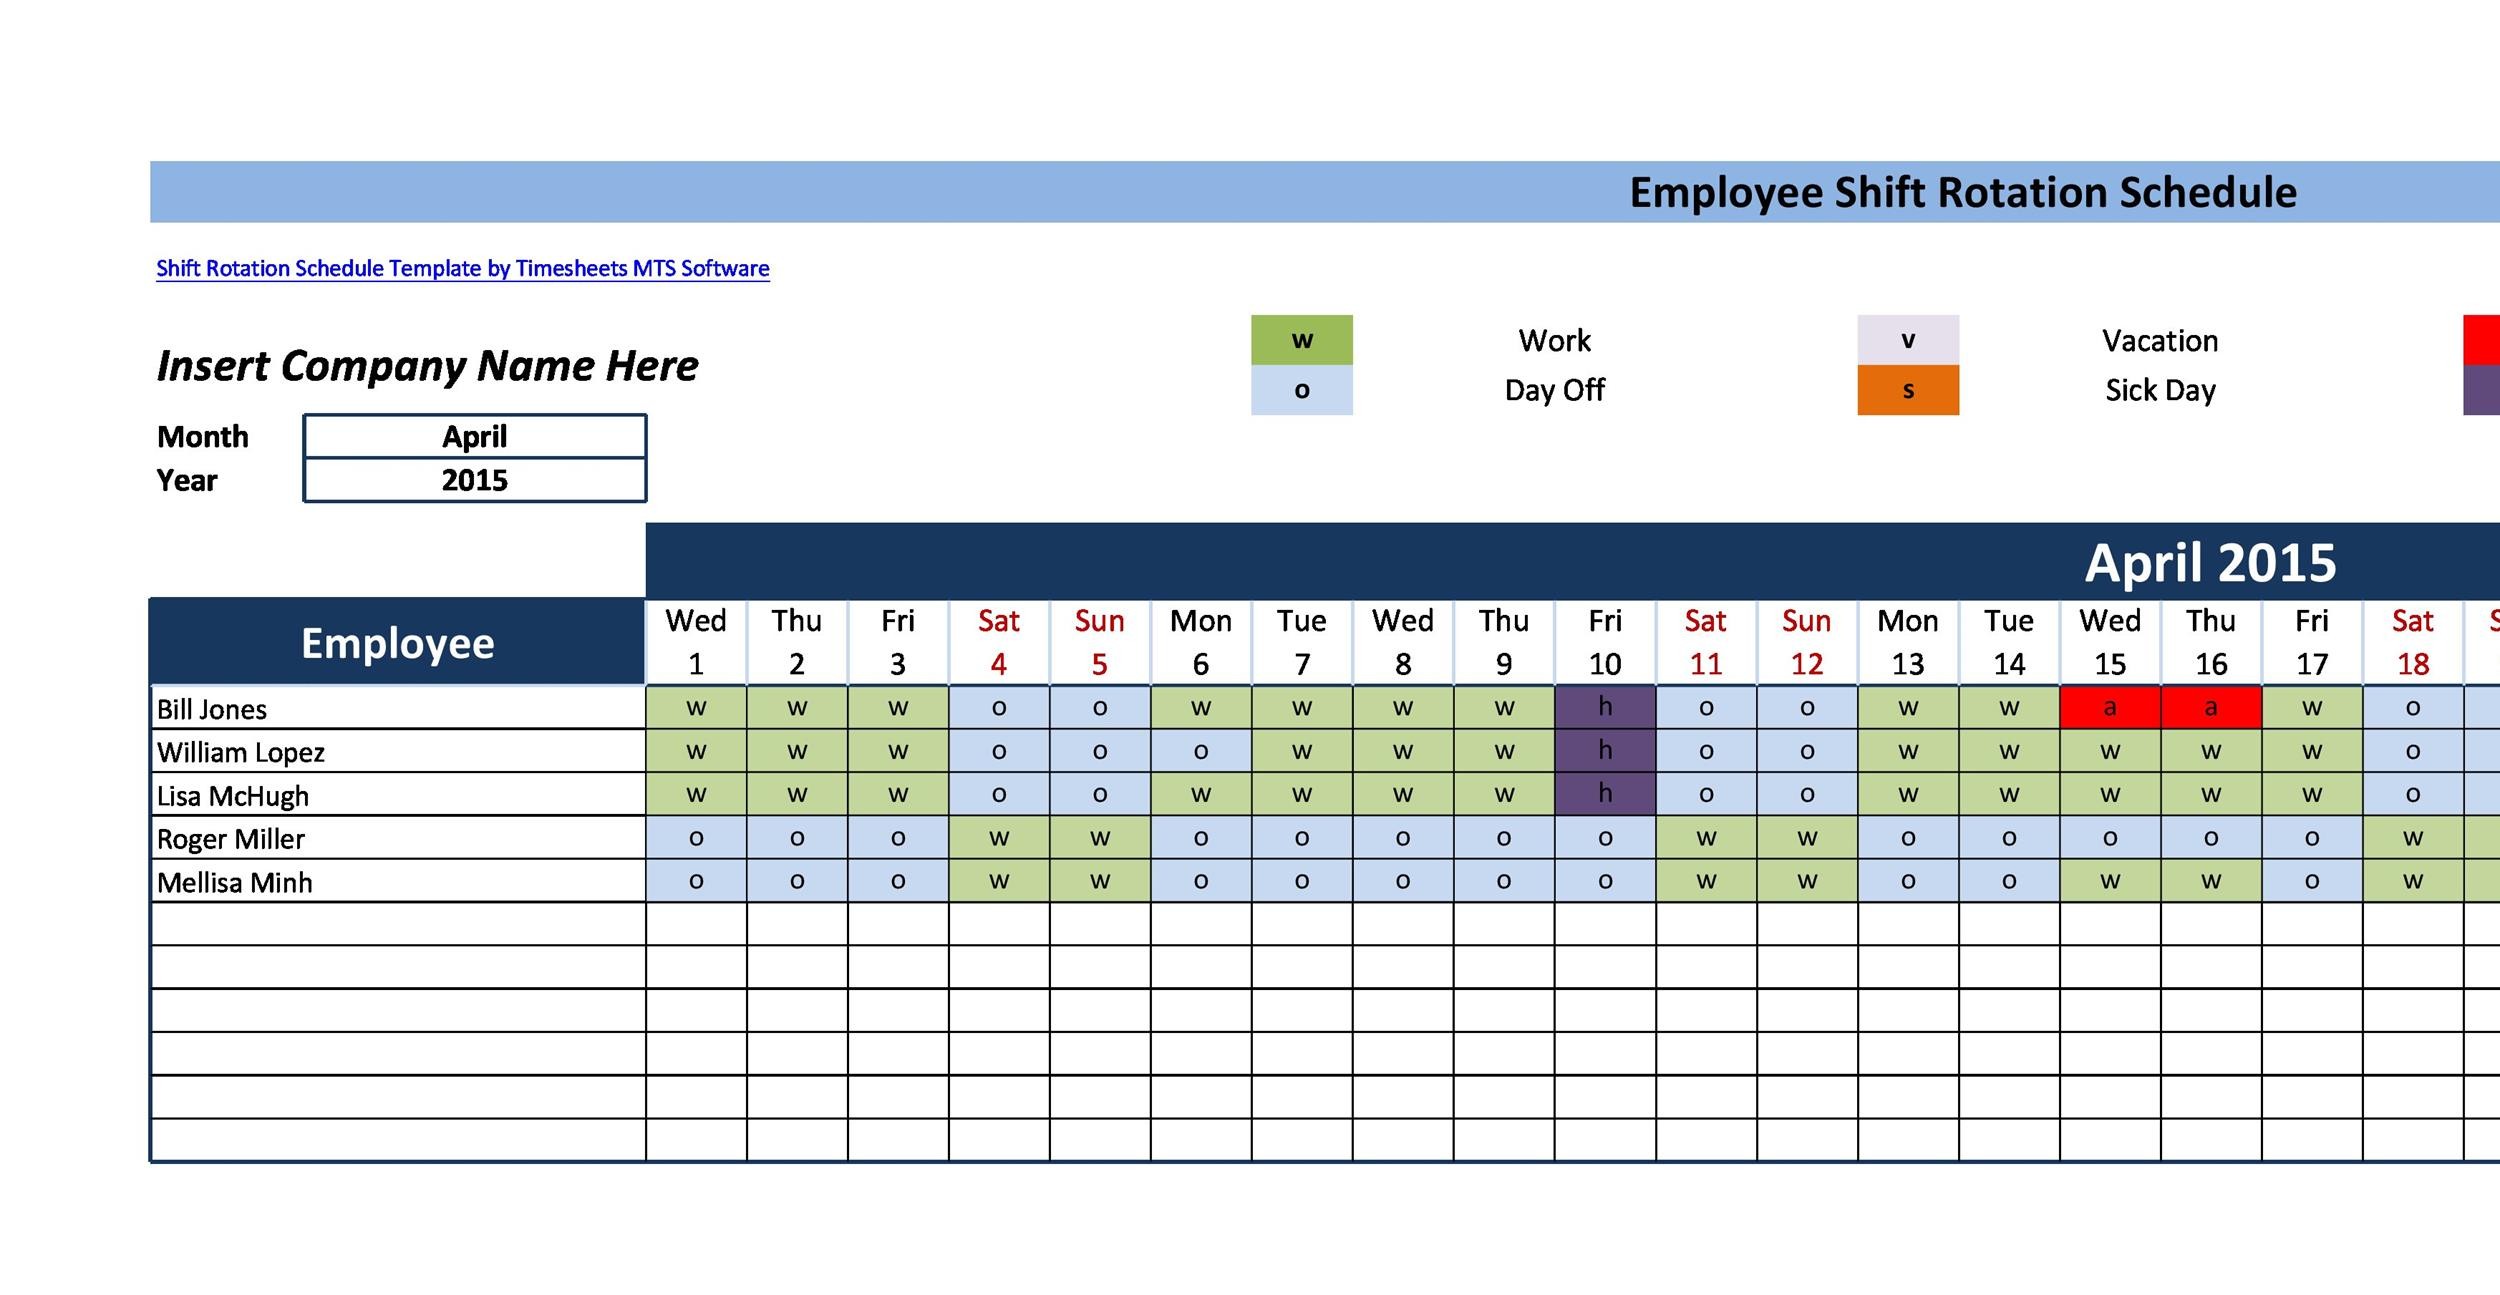 Employee Scheduling Example 24 7 8 Hr Shifts On Weekdays 12 Hr